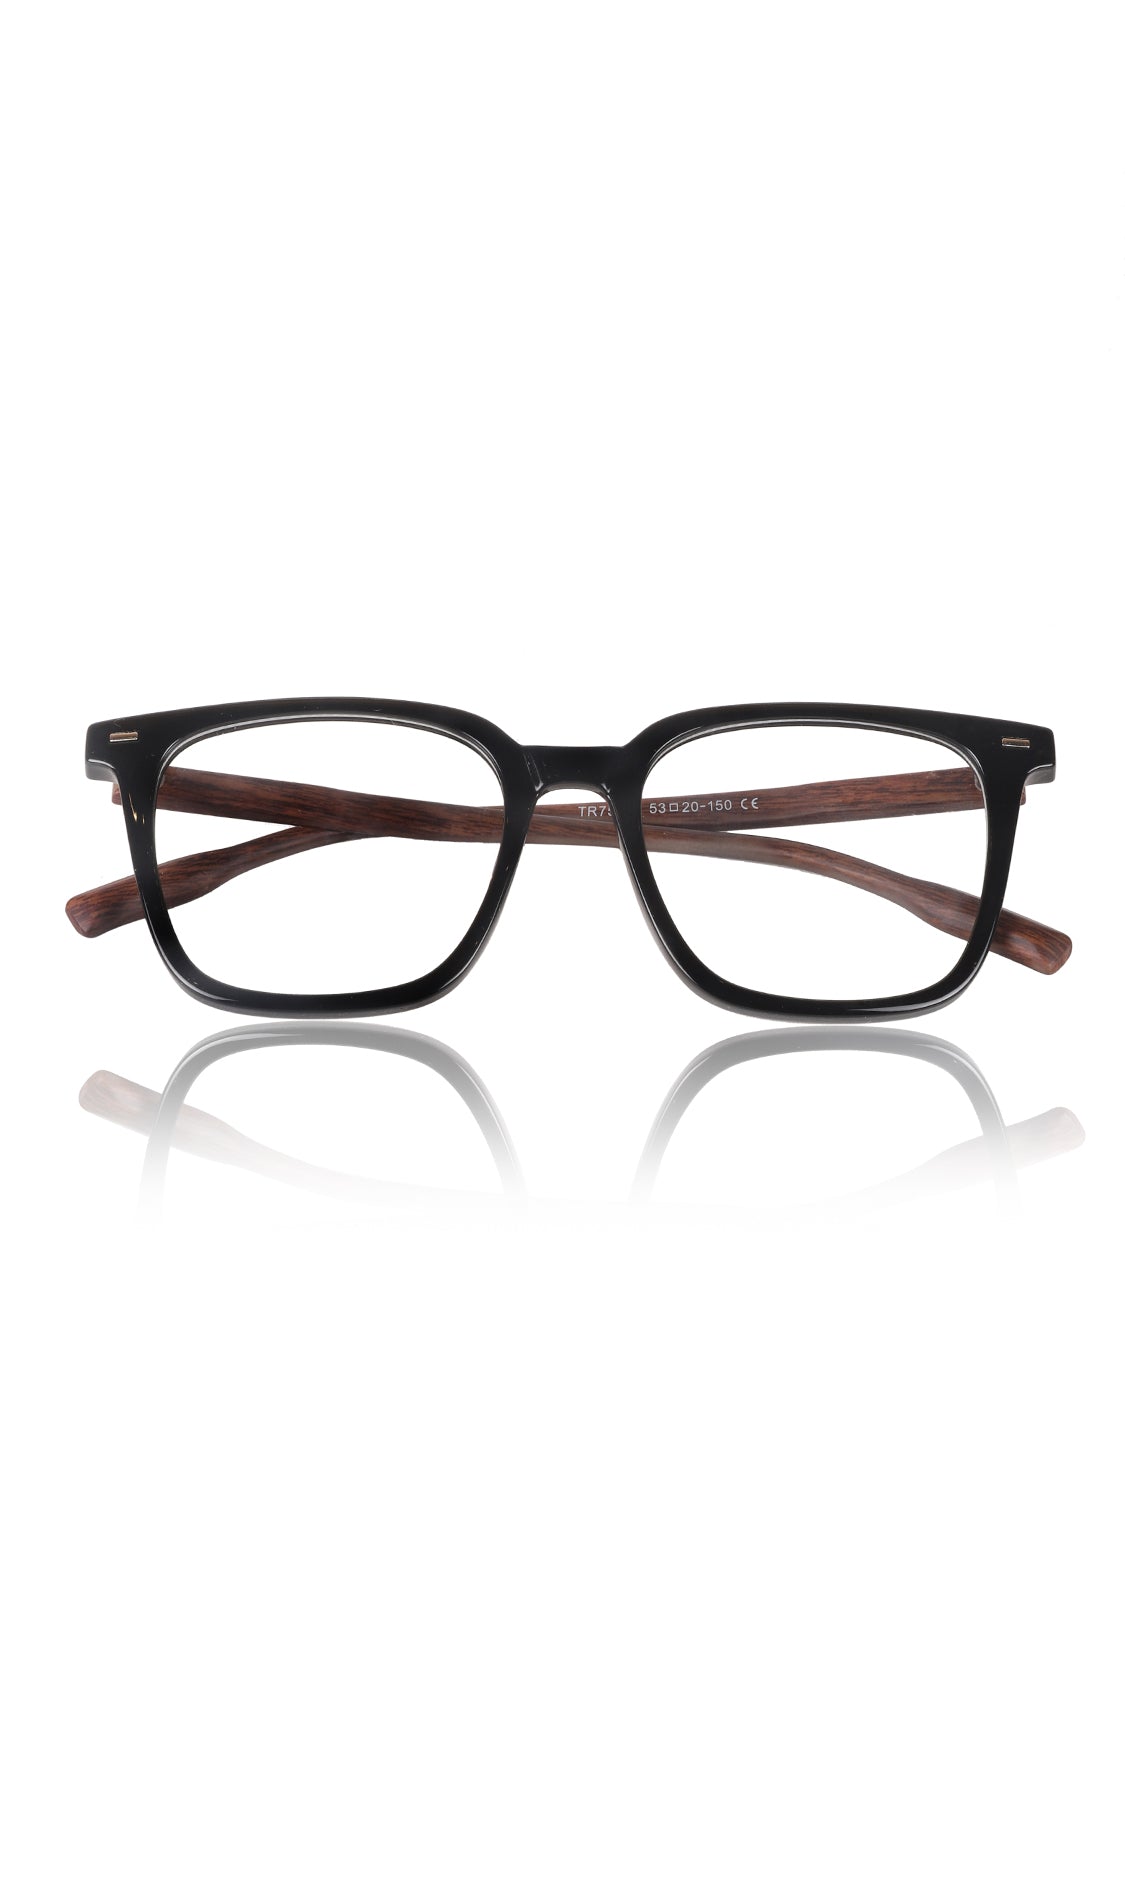 Jodykoes® Premium Series Woodern Finish collection Square Spectacle Frame | Fashionable Eyeglasses Eyewear for Men and Women (Black Wood) - Jodykoes ®